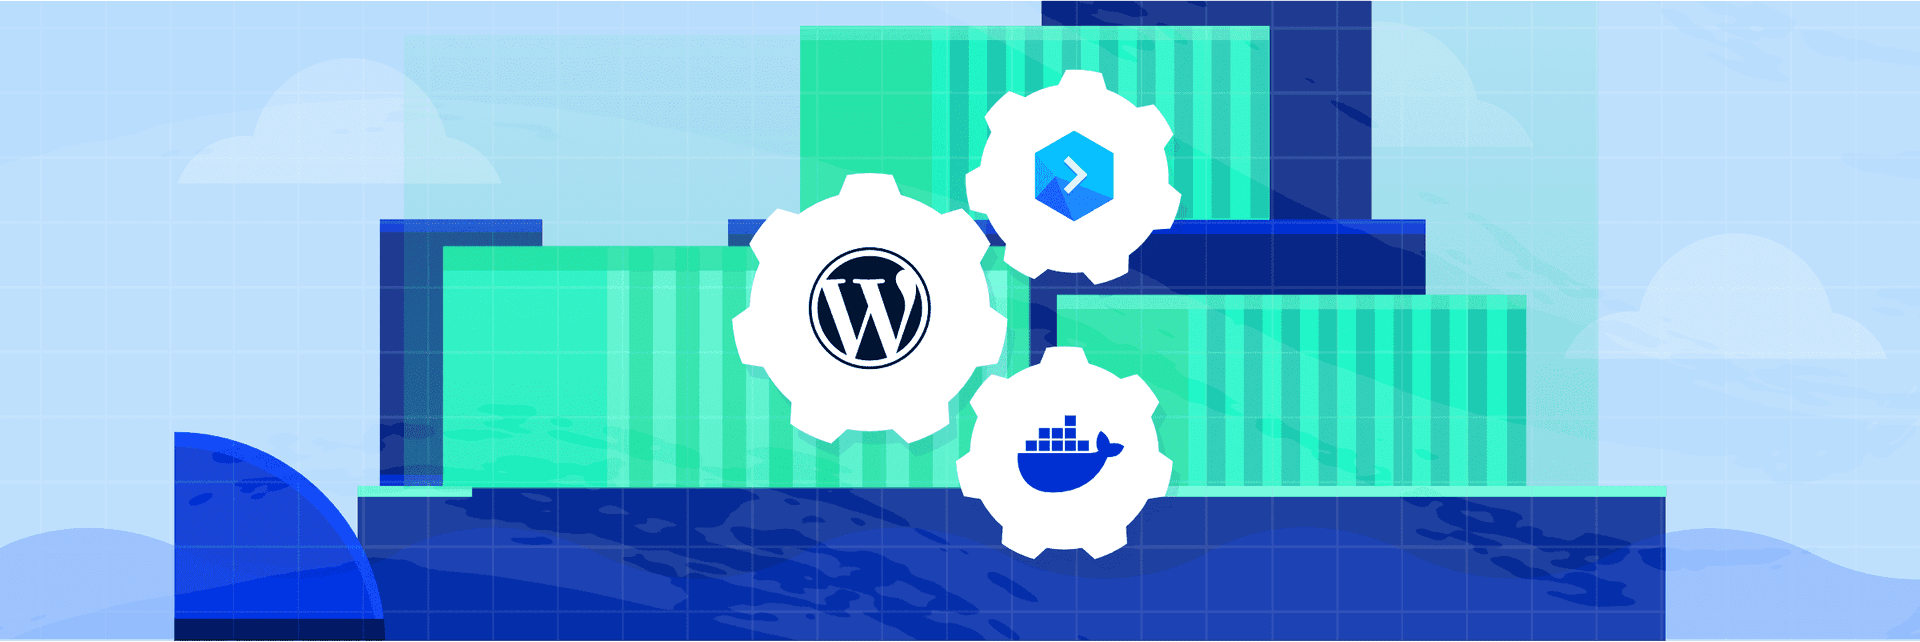 Read more about WordPress in Docker: Dockerization, automation, and Kubernetes.